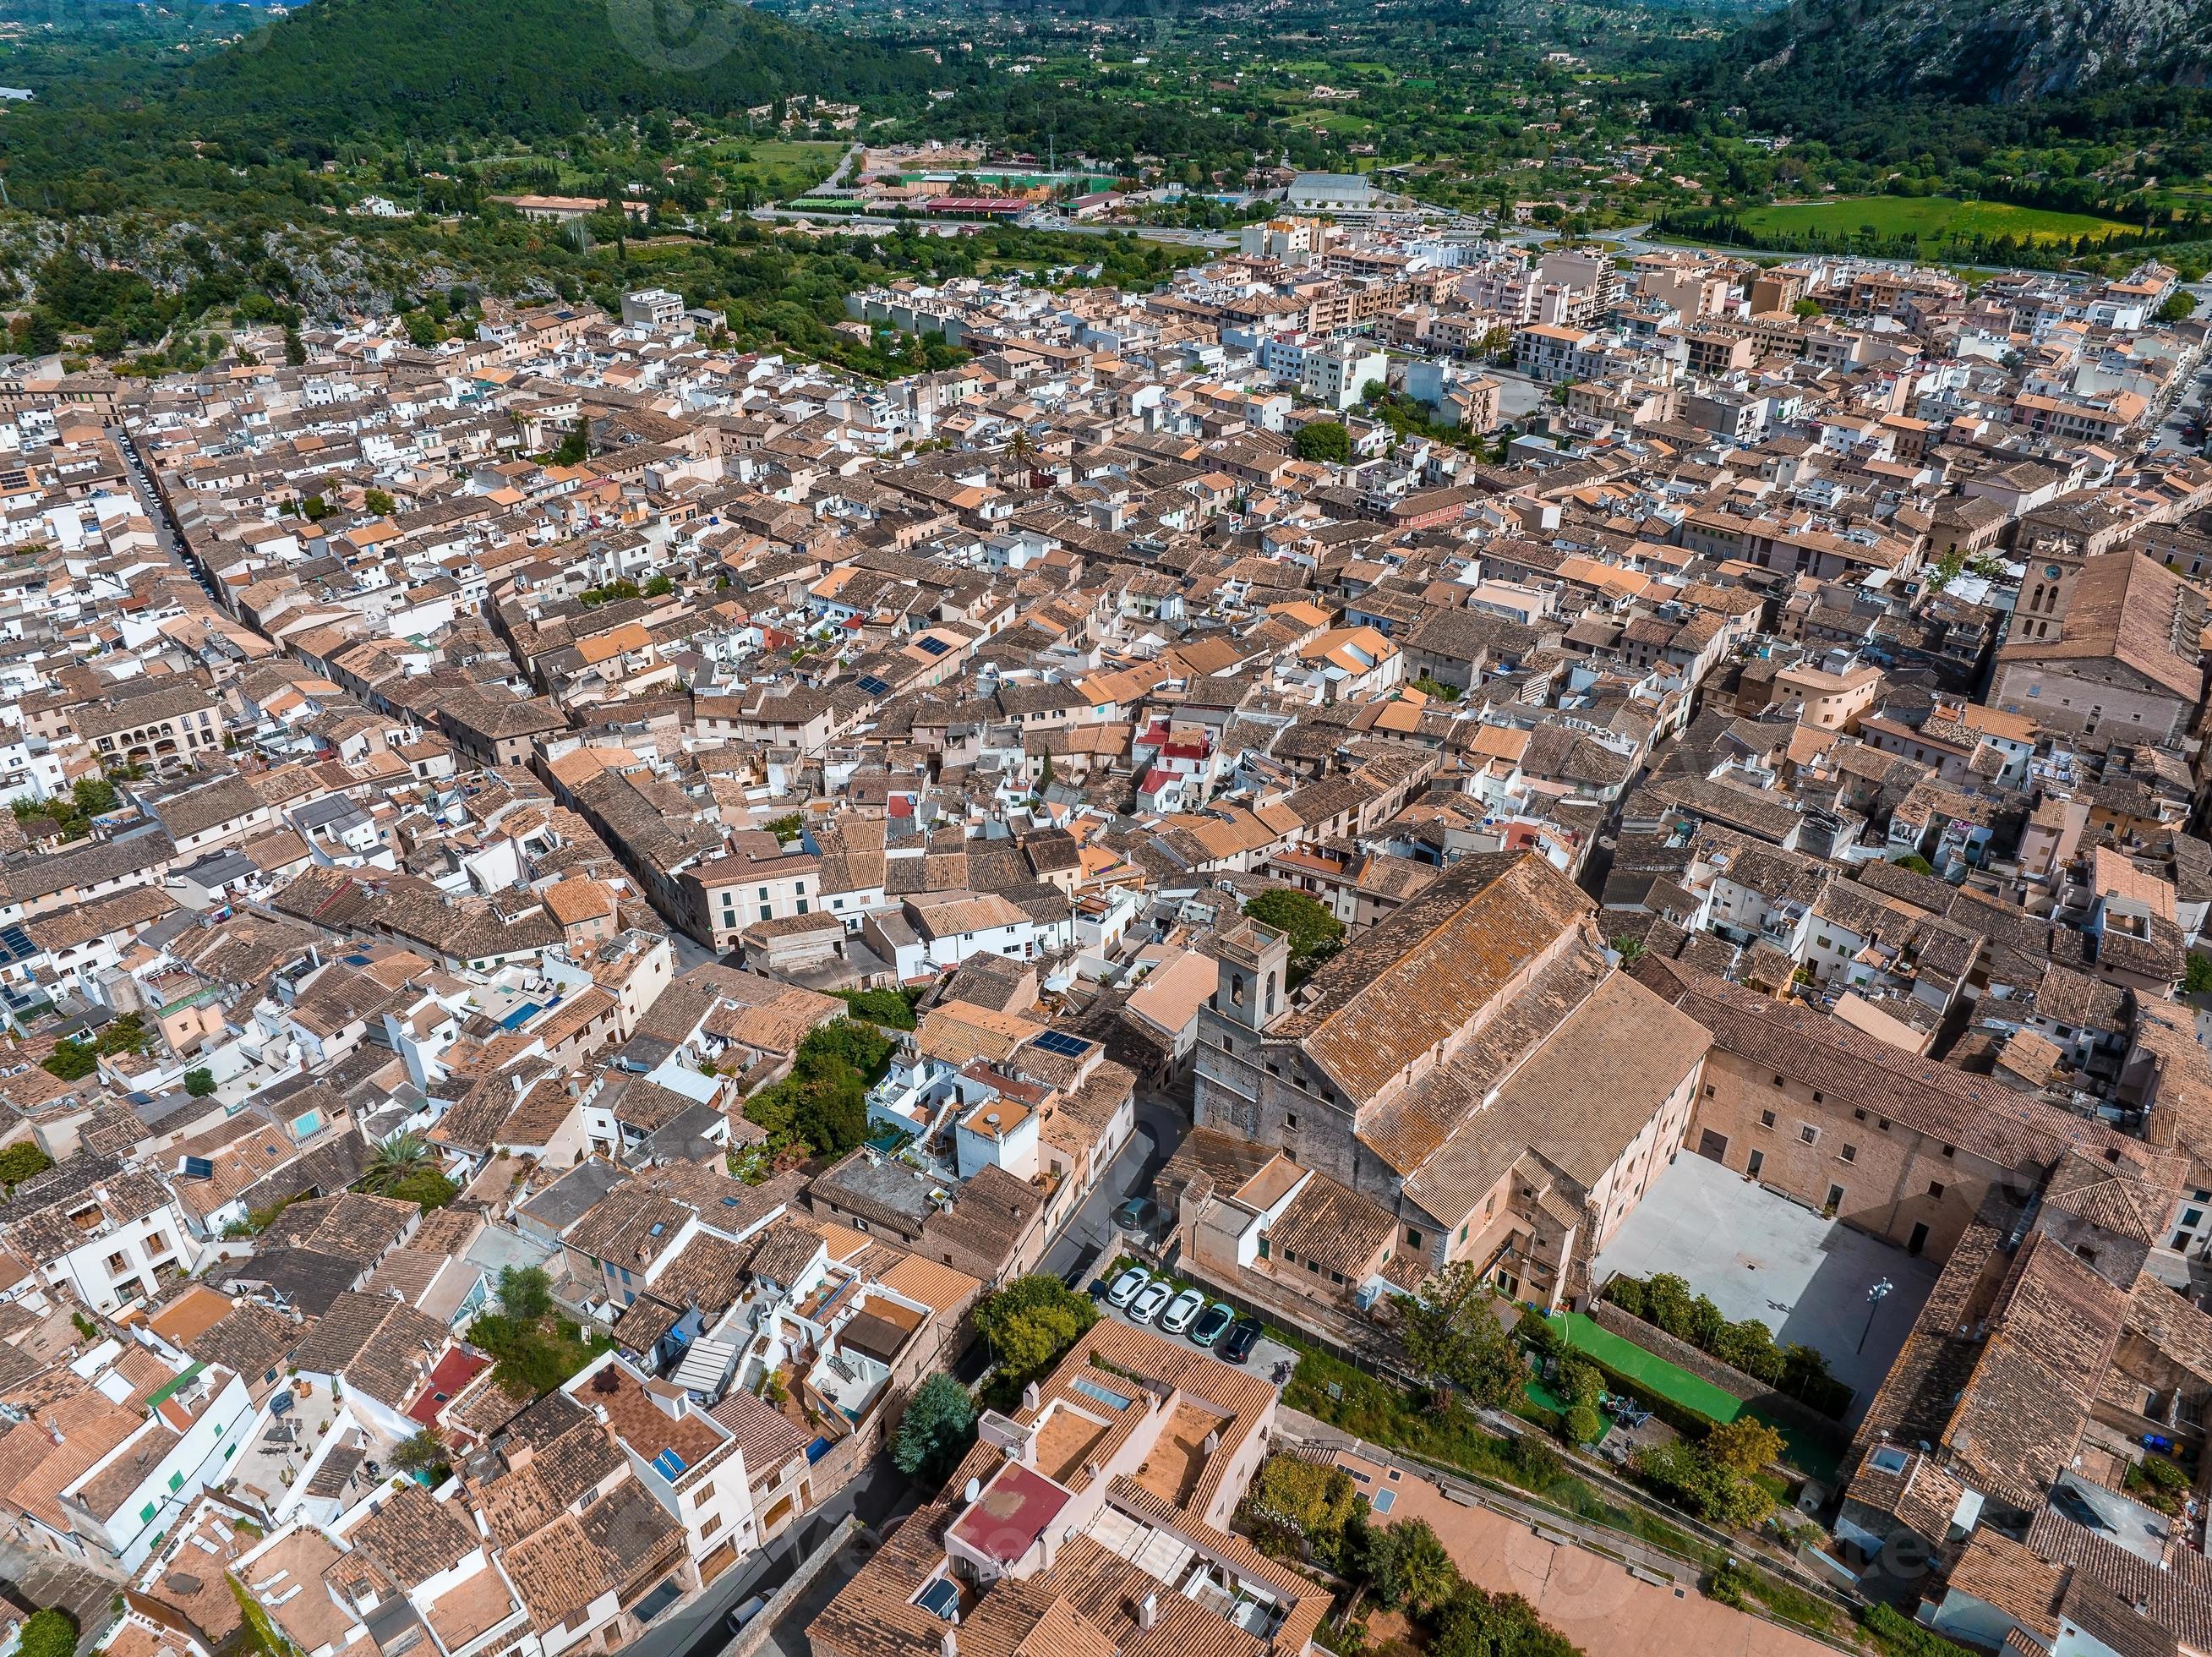 Aerial view of Pollenca, Mallorca, Spain. 7803106 Stock Photo at Vecteezy